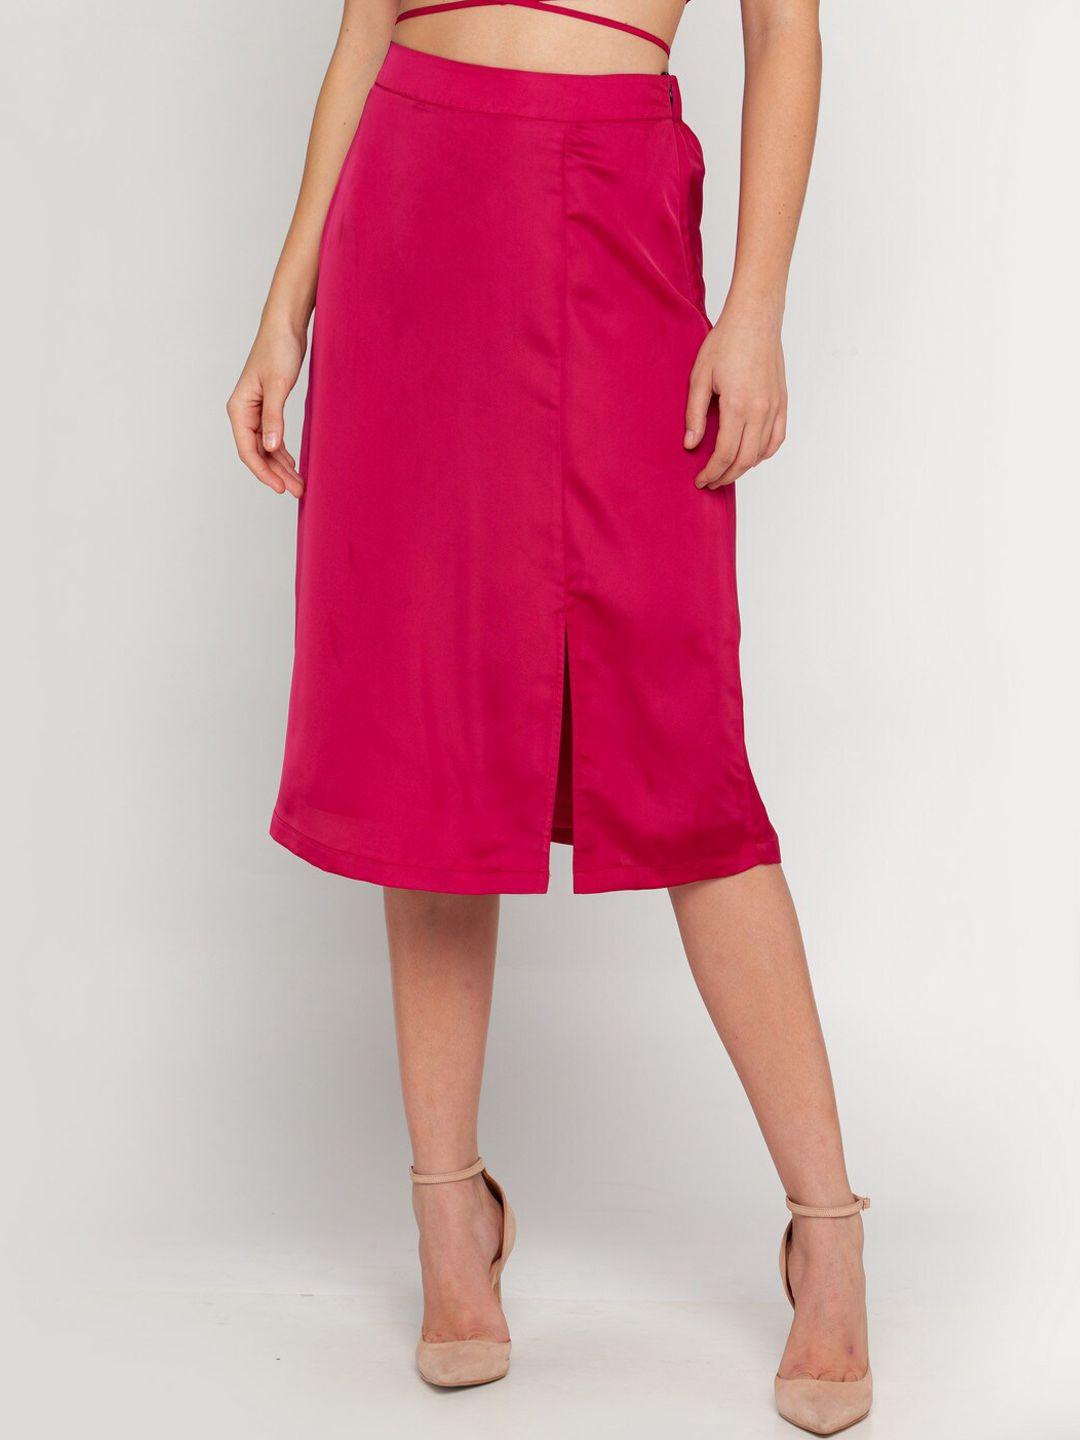 zink london pink a-line skirt